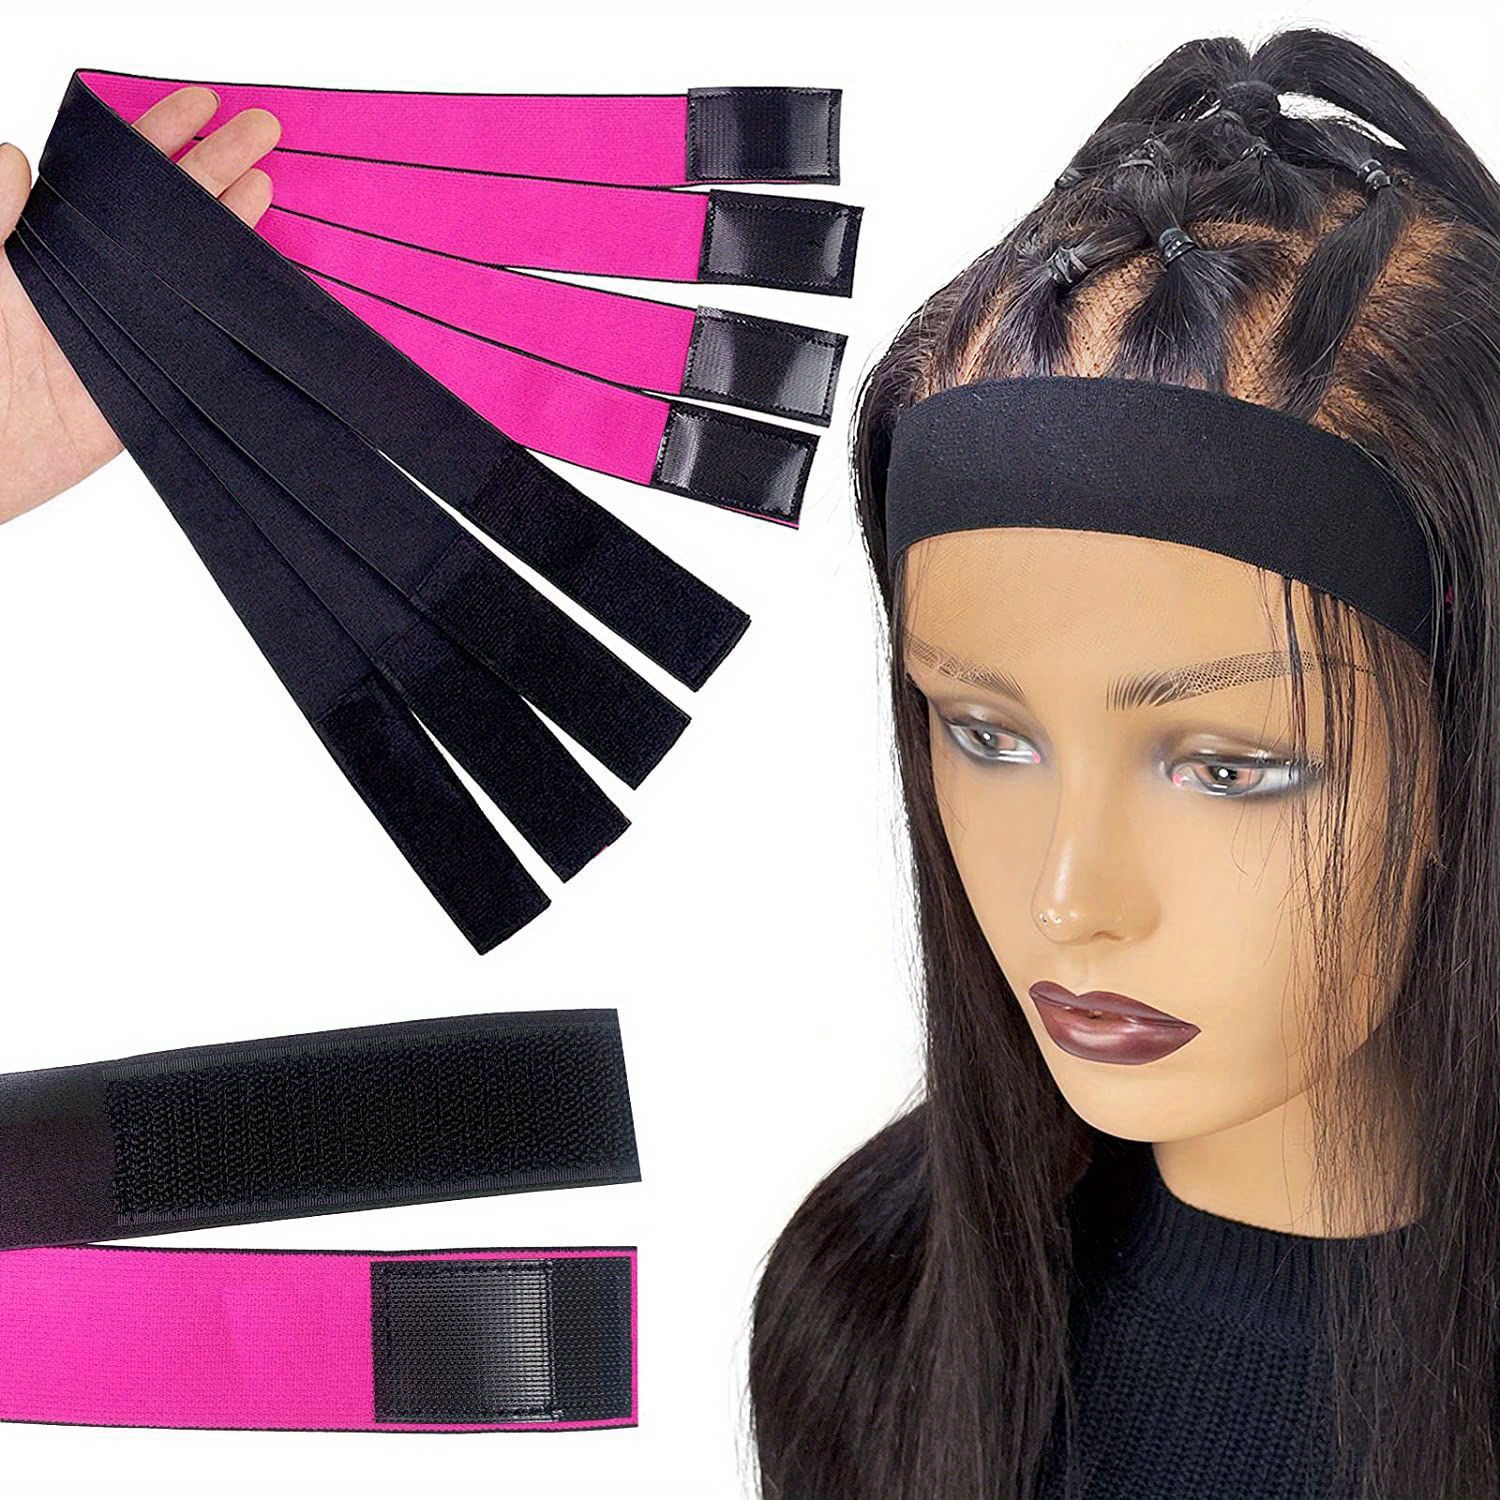 Elastic Bands For Wig Edges Adjustable Lace Melting Band For